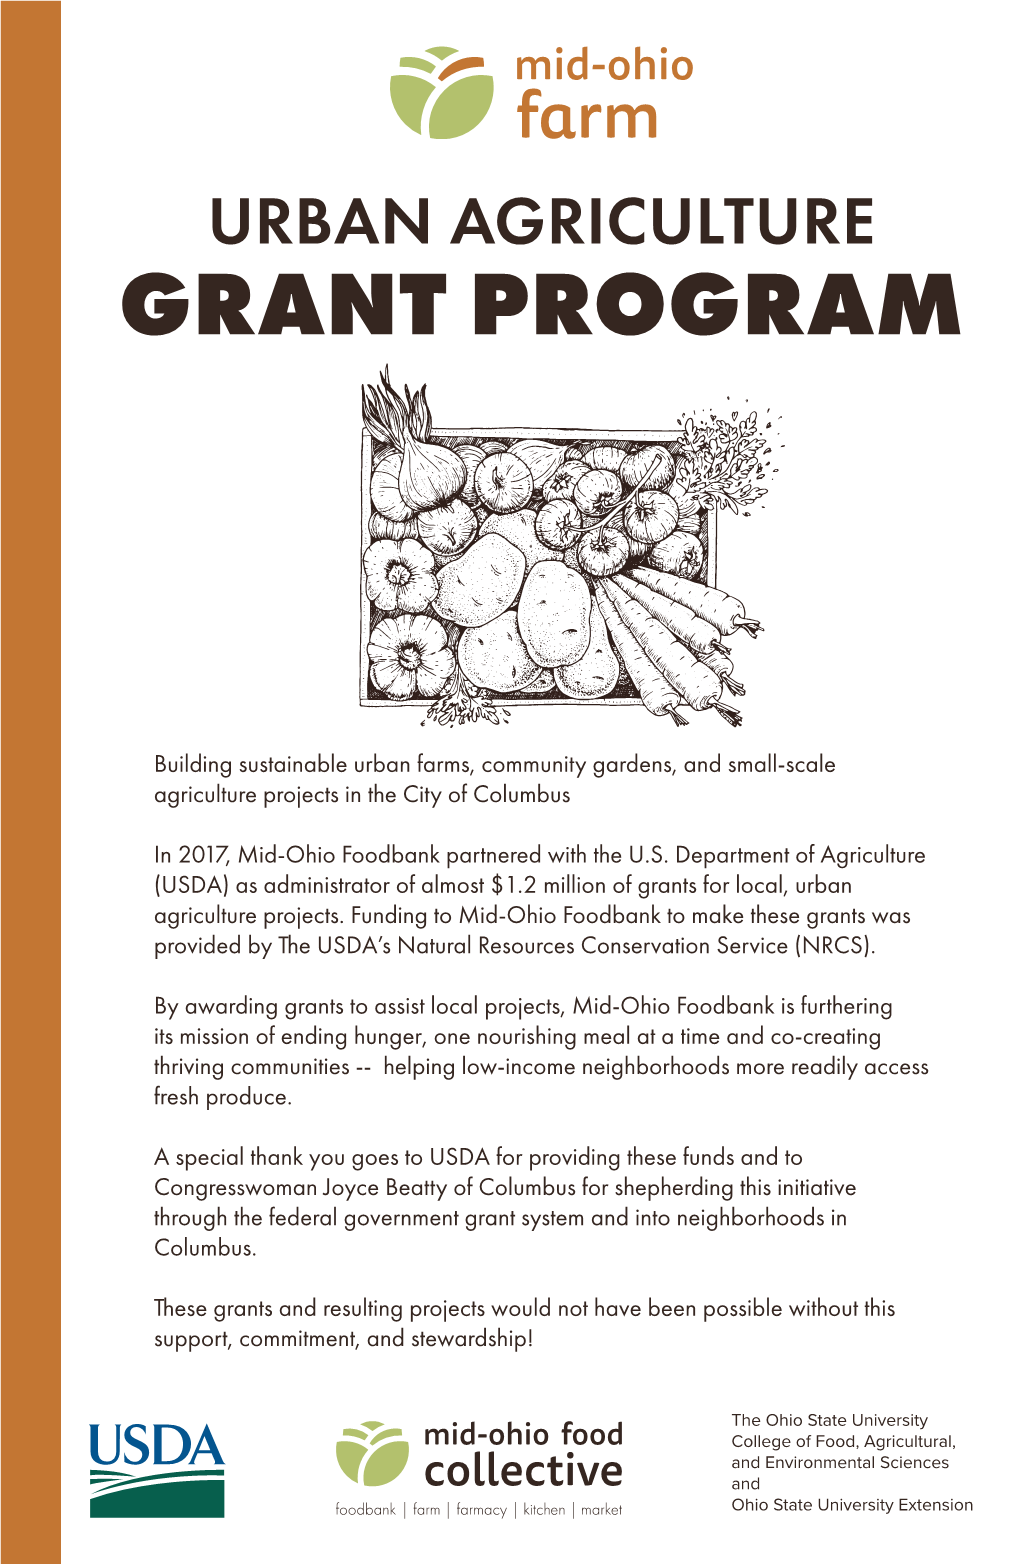 Grant Program